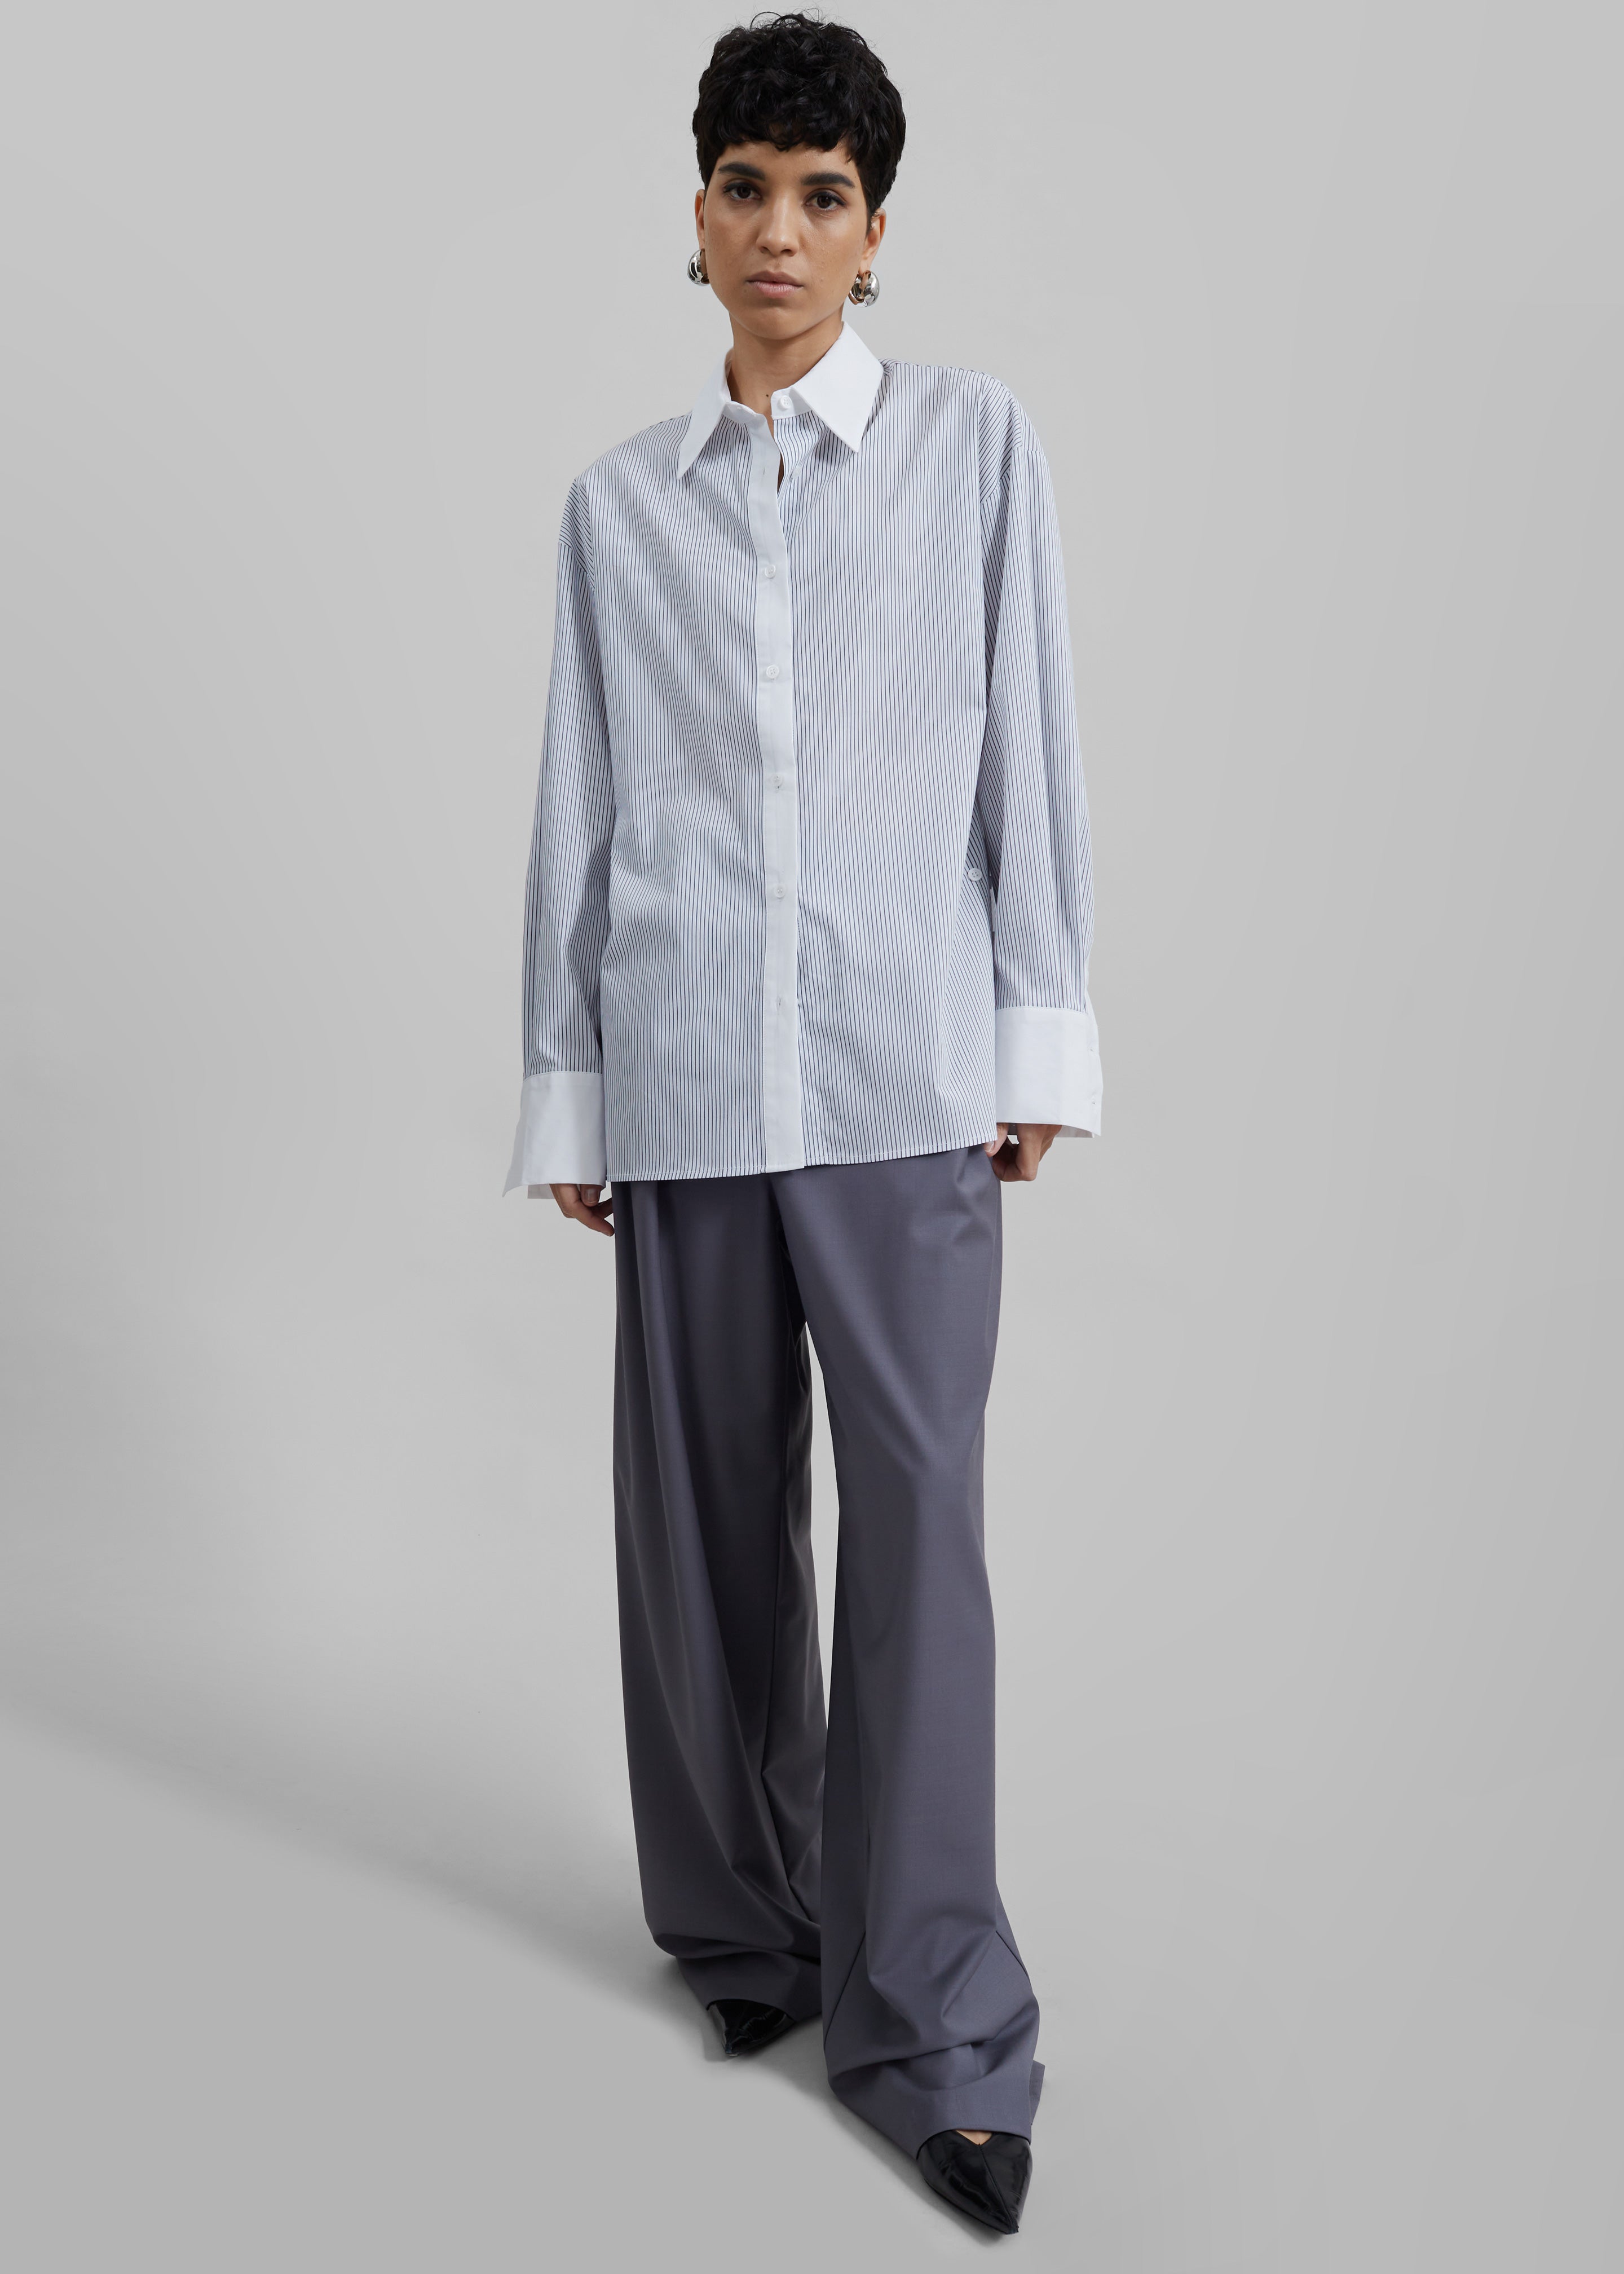 Nerina Button Up Shirt - Black/White Stripe - 2